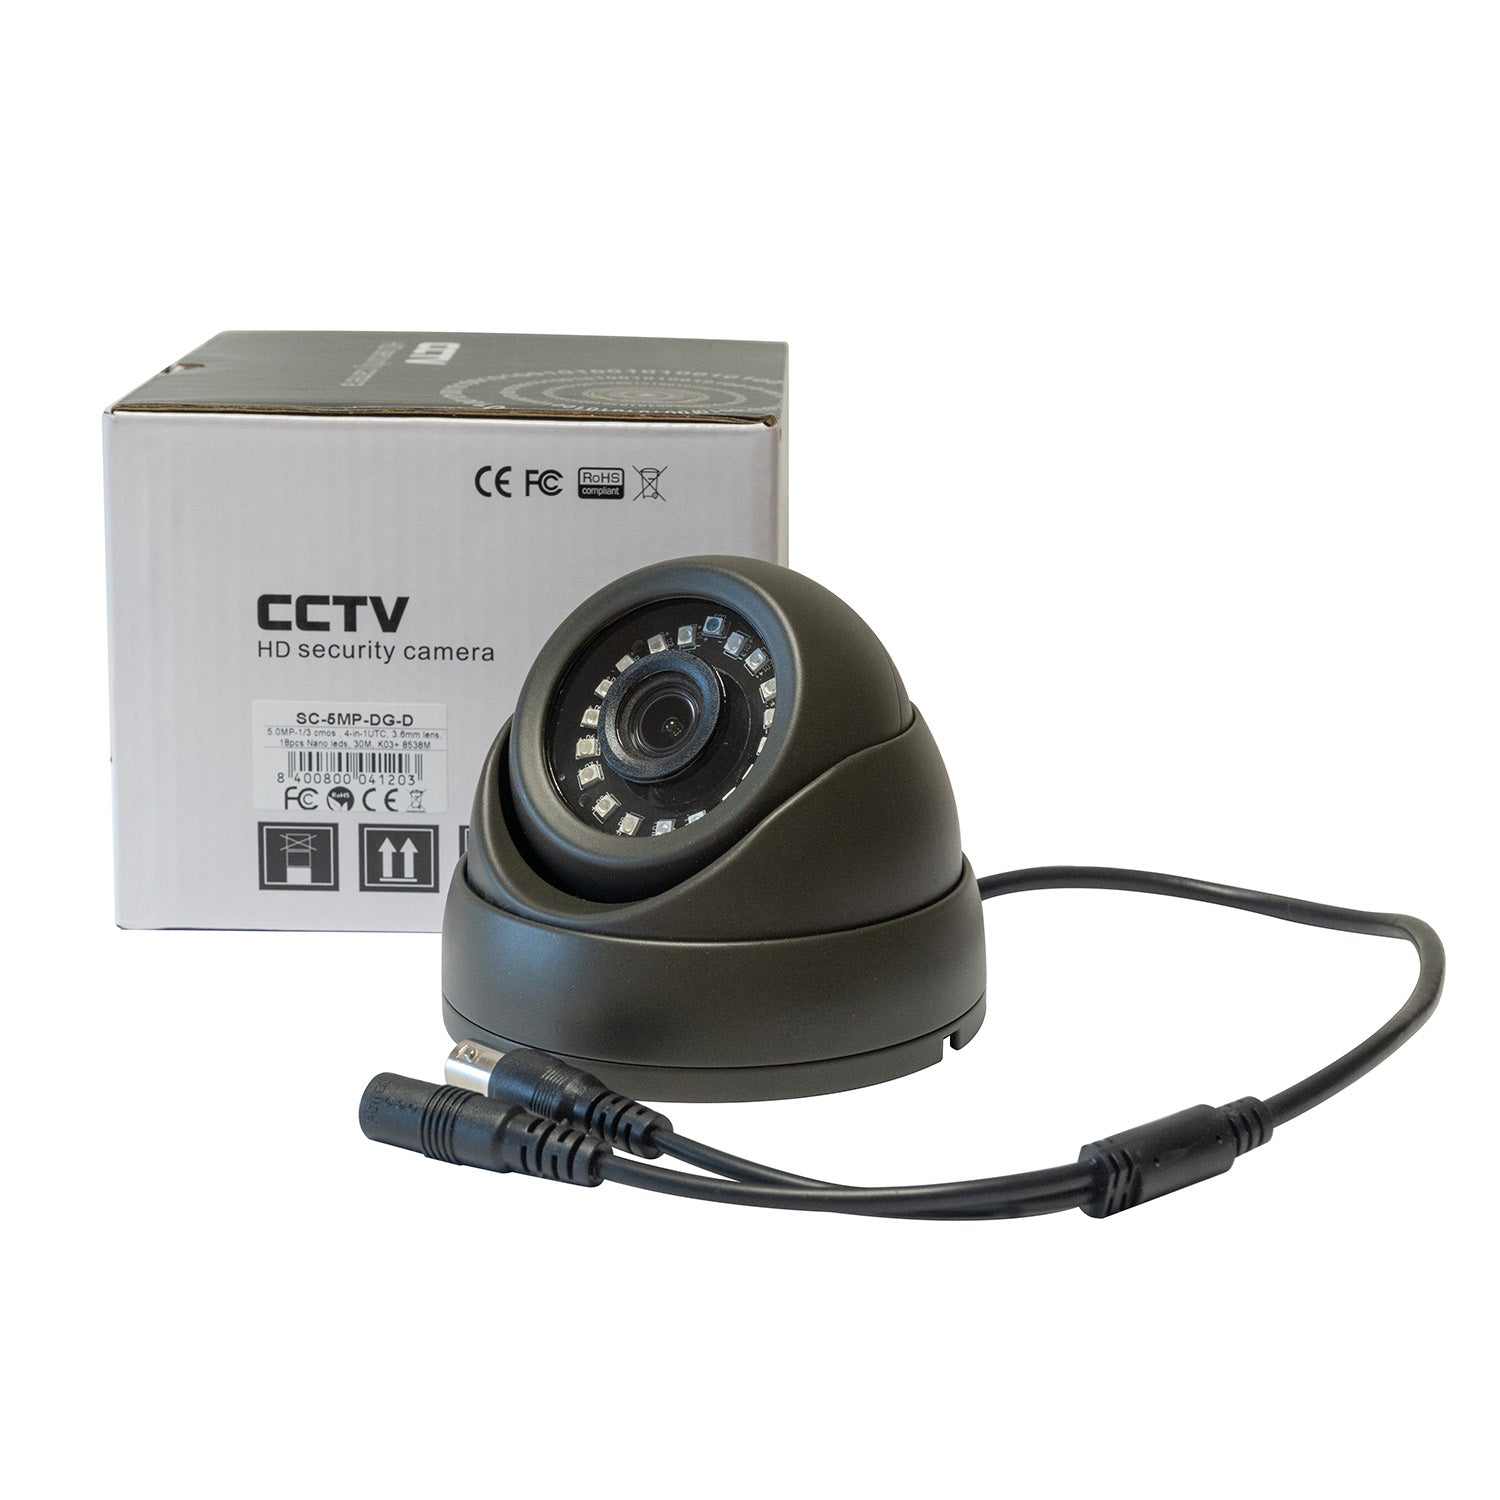 5MP CCTV Security Dome Camera - Grey (SC-5MP-DG-D)